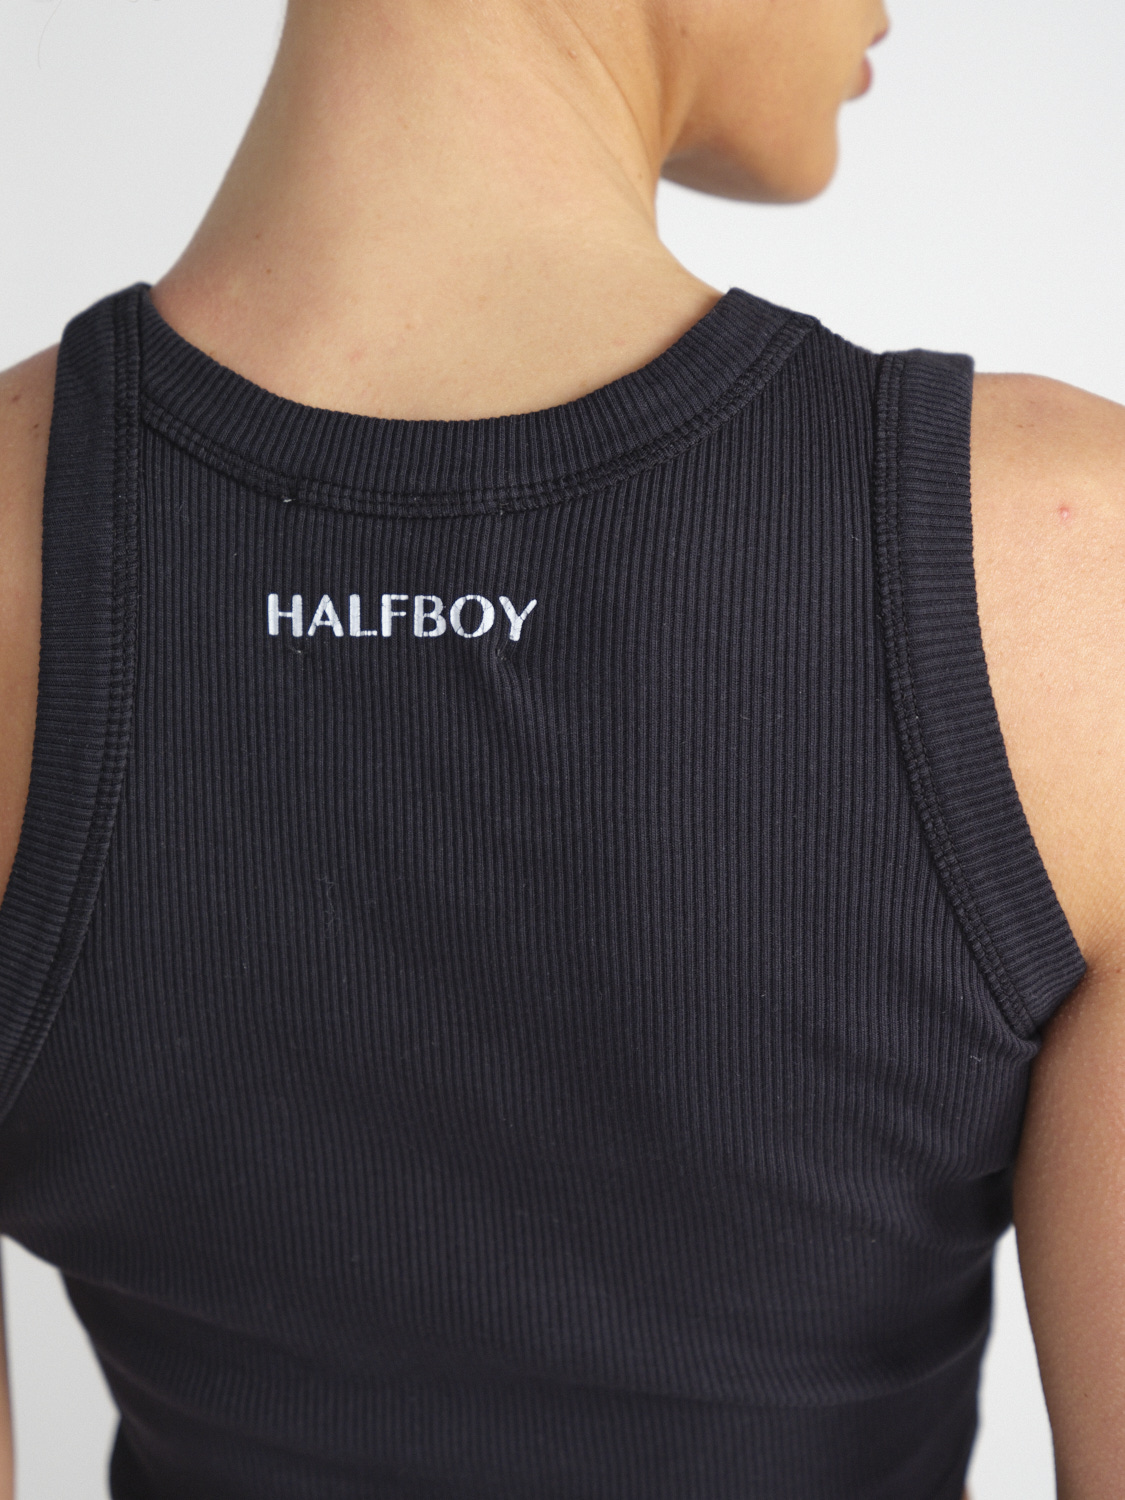 Halfboy Crop – Cropped cotton tank top with logo detail  black S